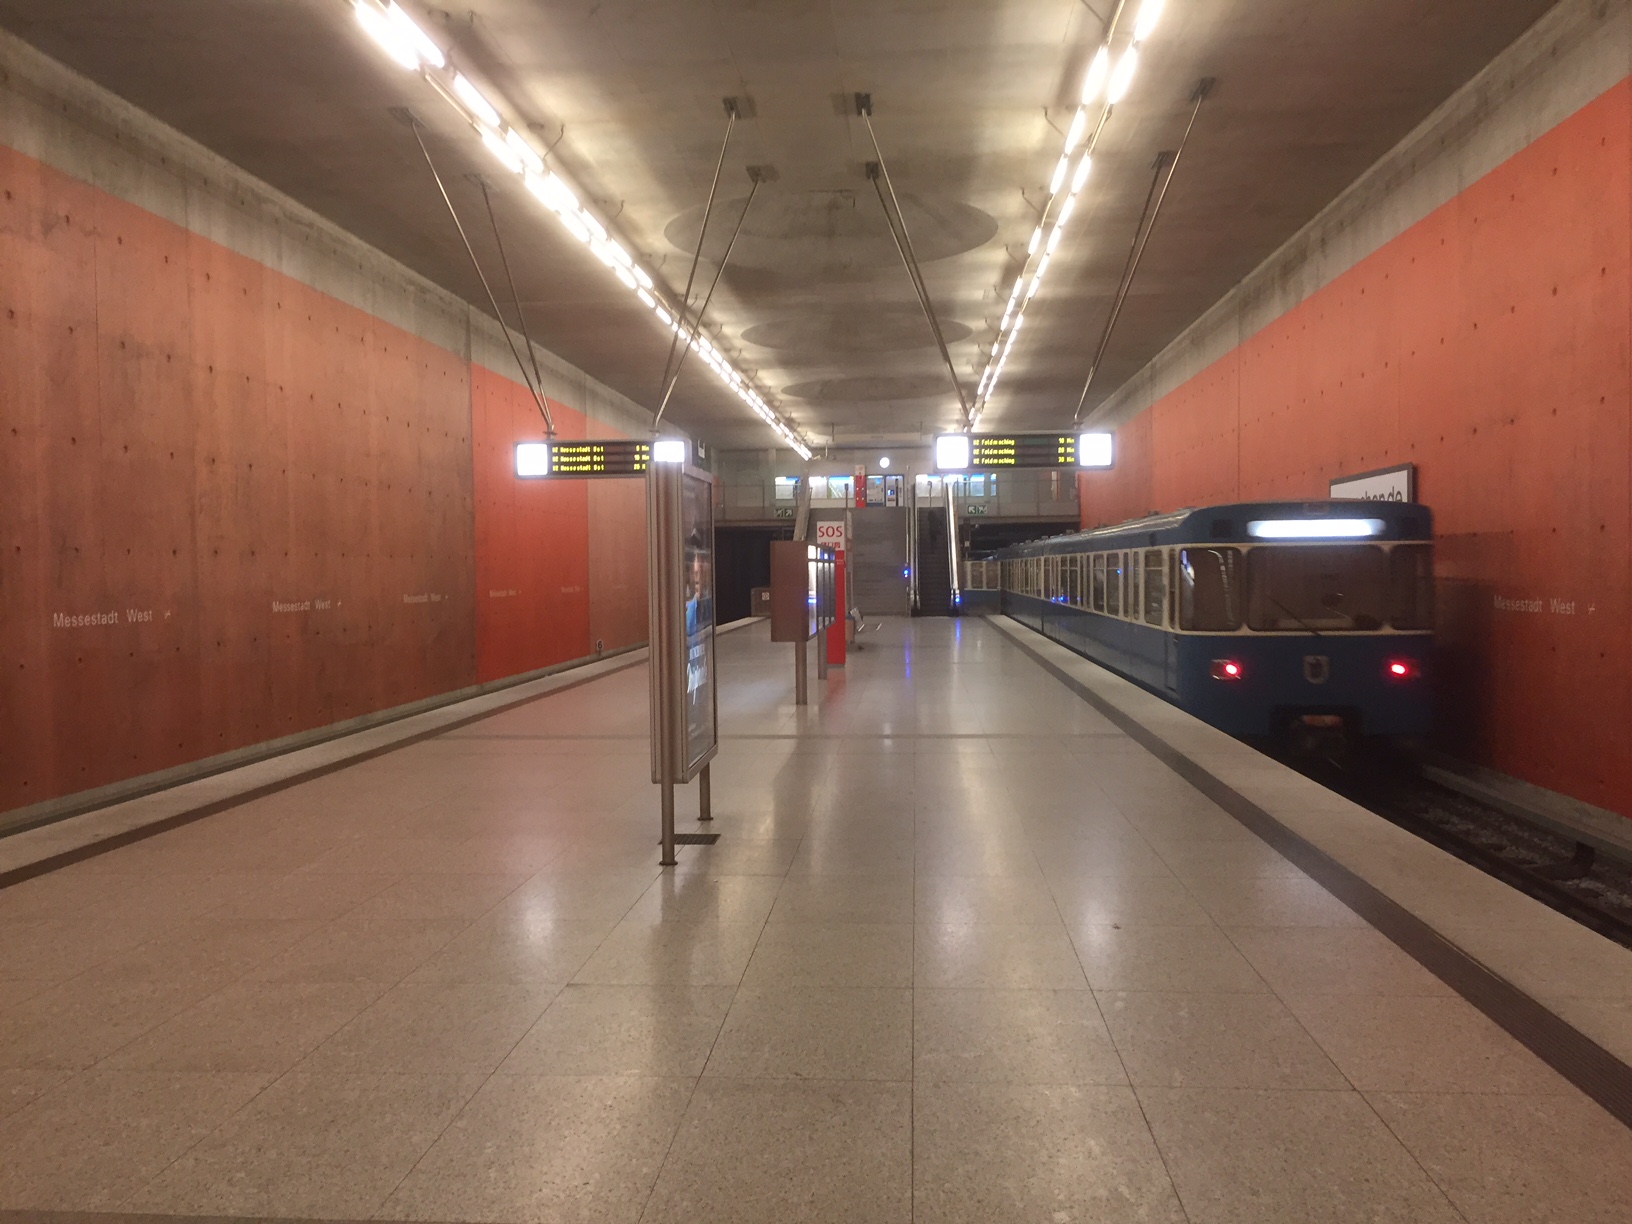 Paris to Munich: And the Underground at Messelstadt.